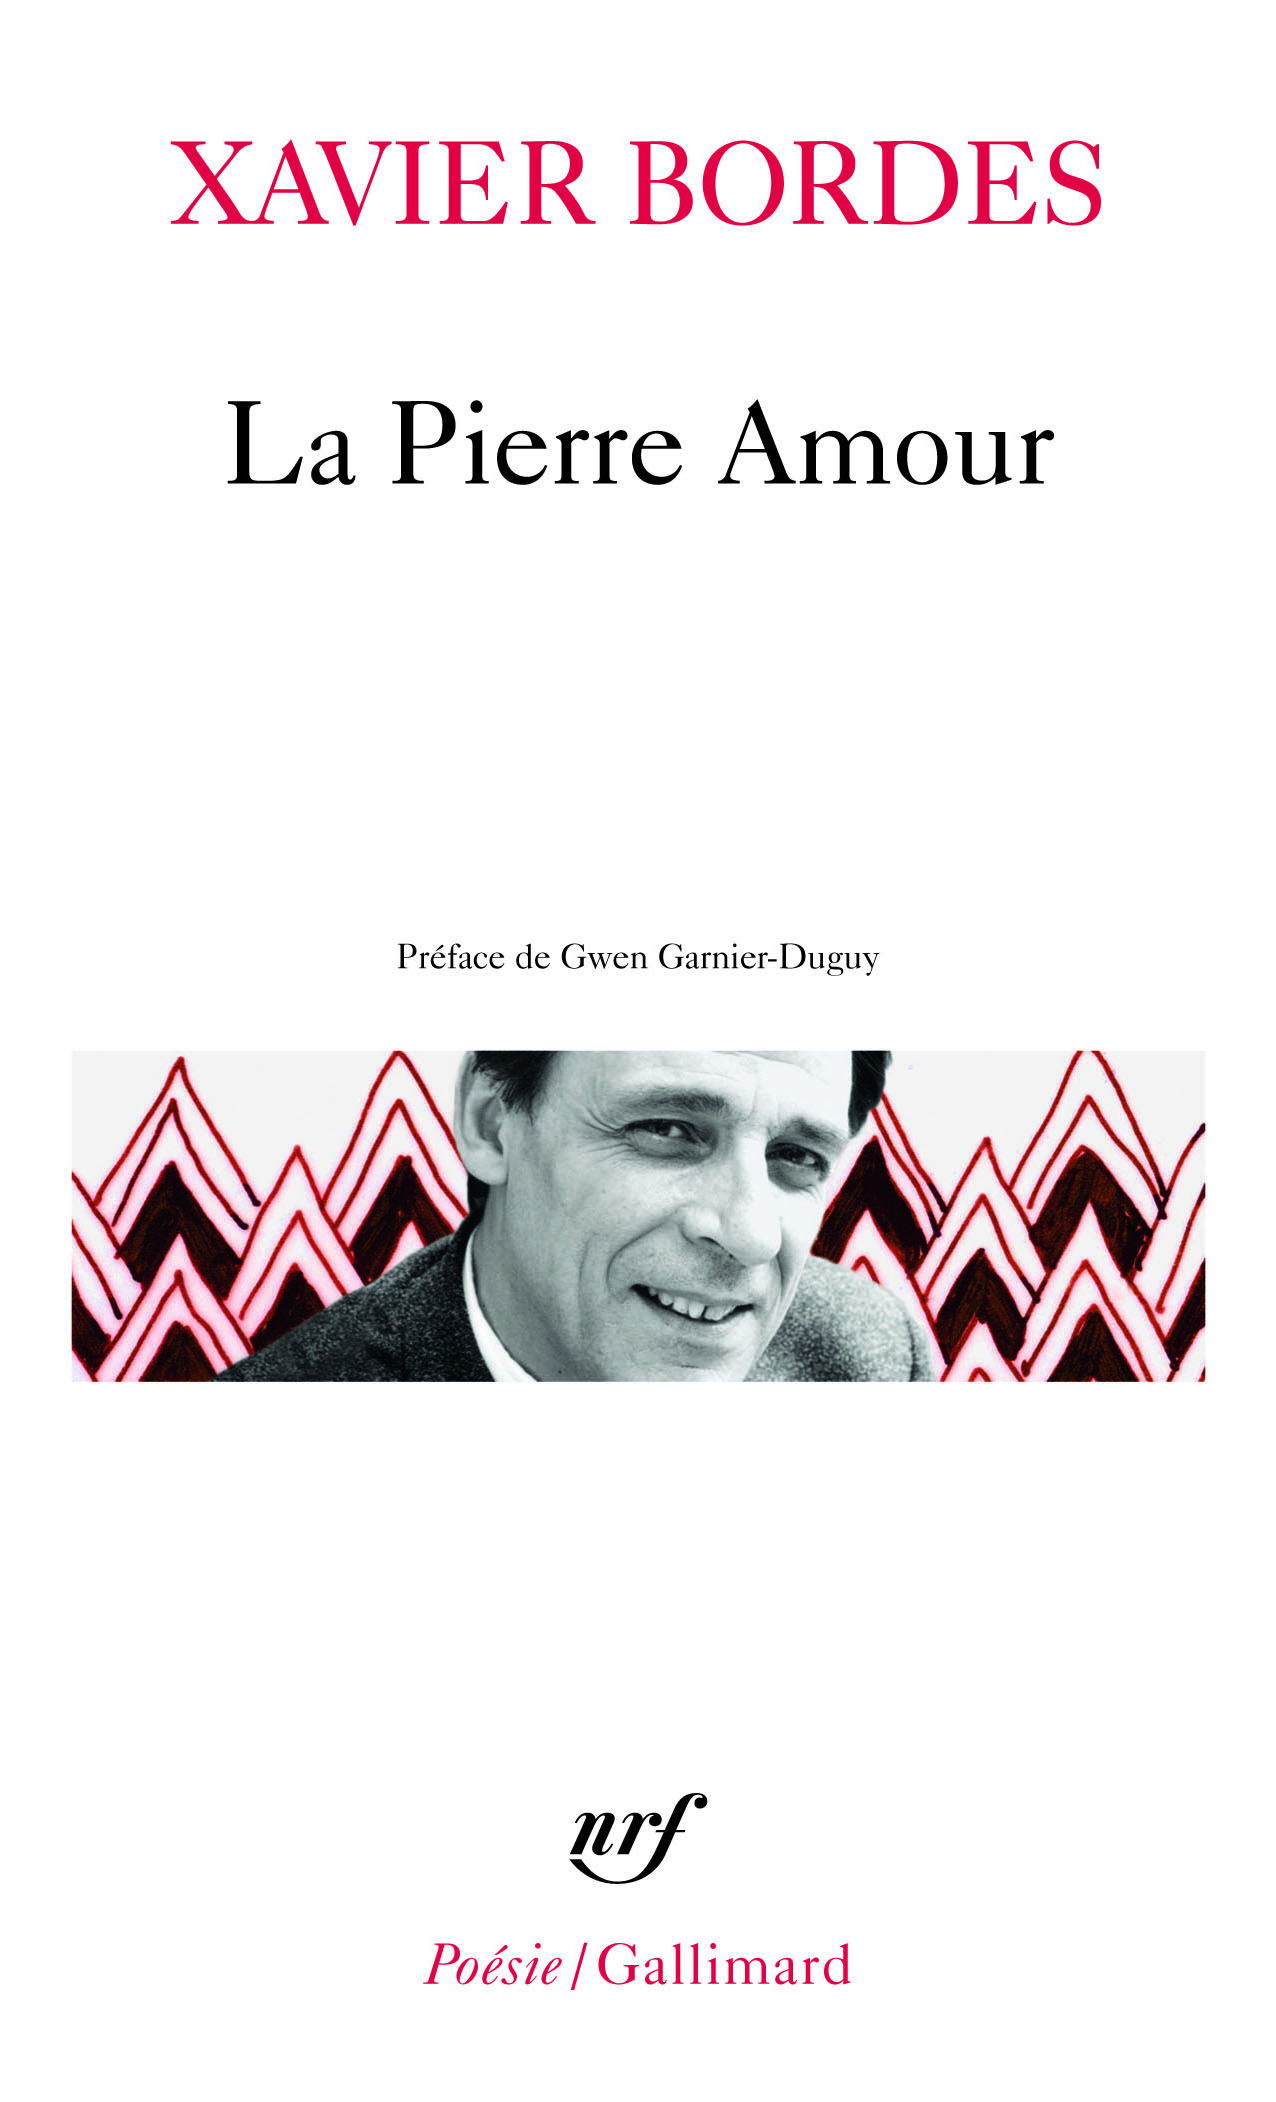 Xavier Bordes, La Pierre Amour, collection Poésie/Gallimard